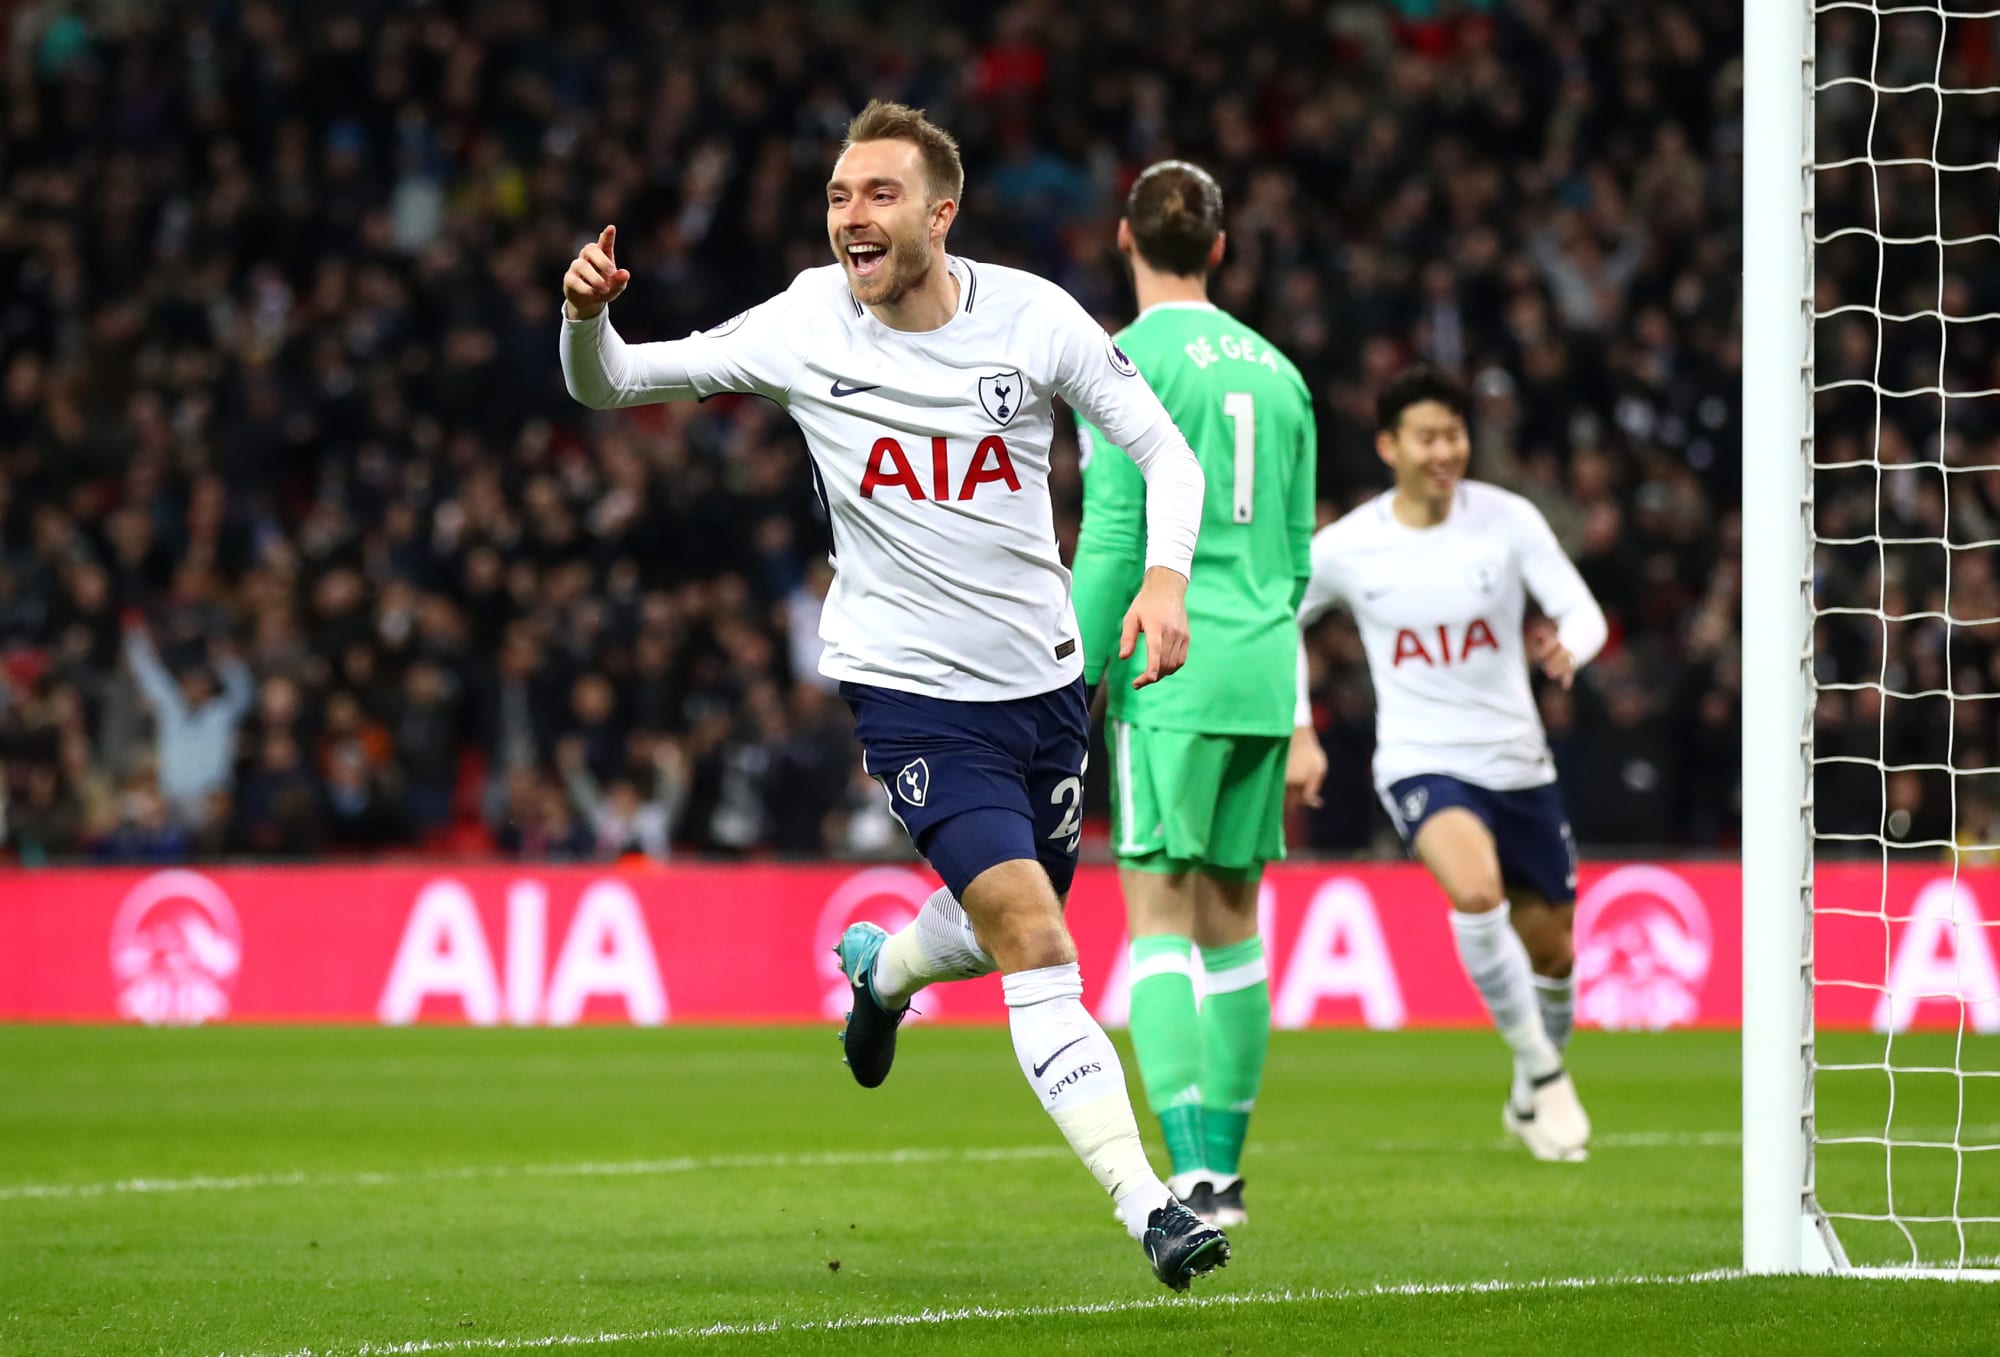 Tottenham score third fastest Premier League goal in 2-0 win vs. United